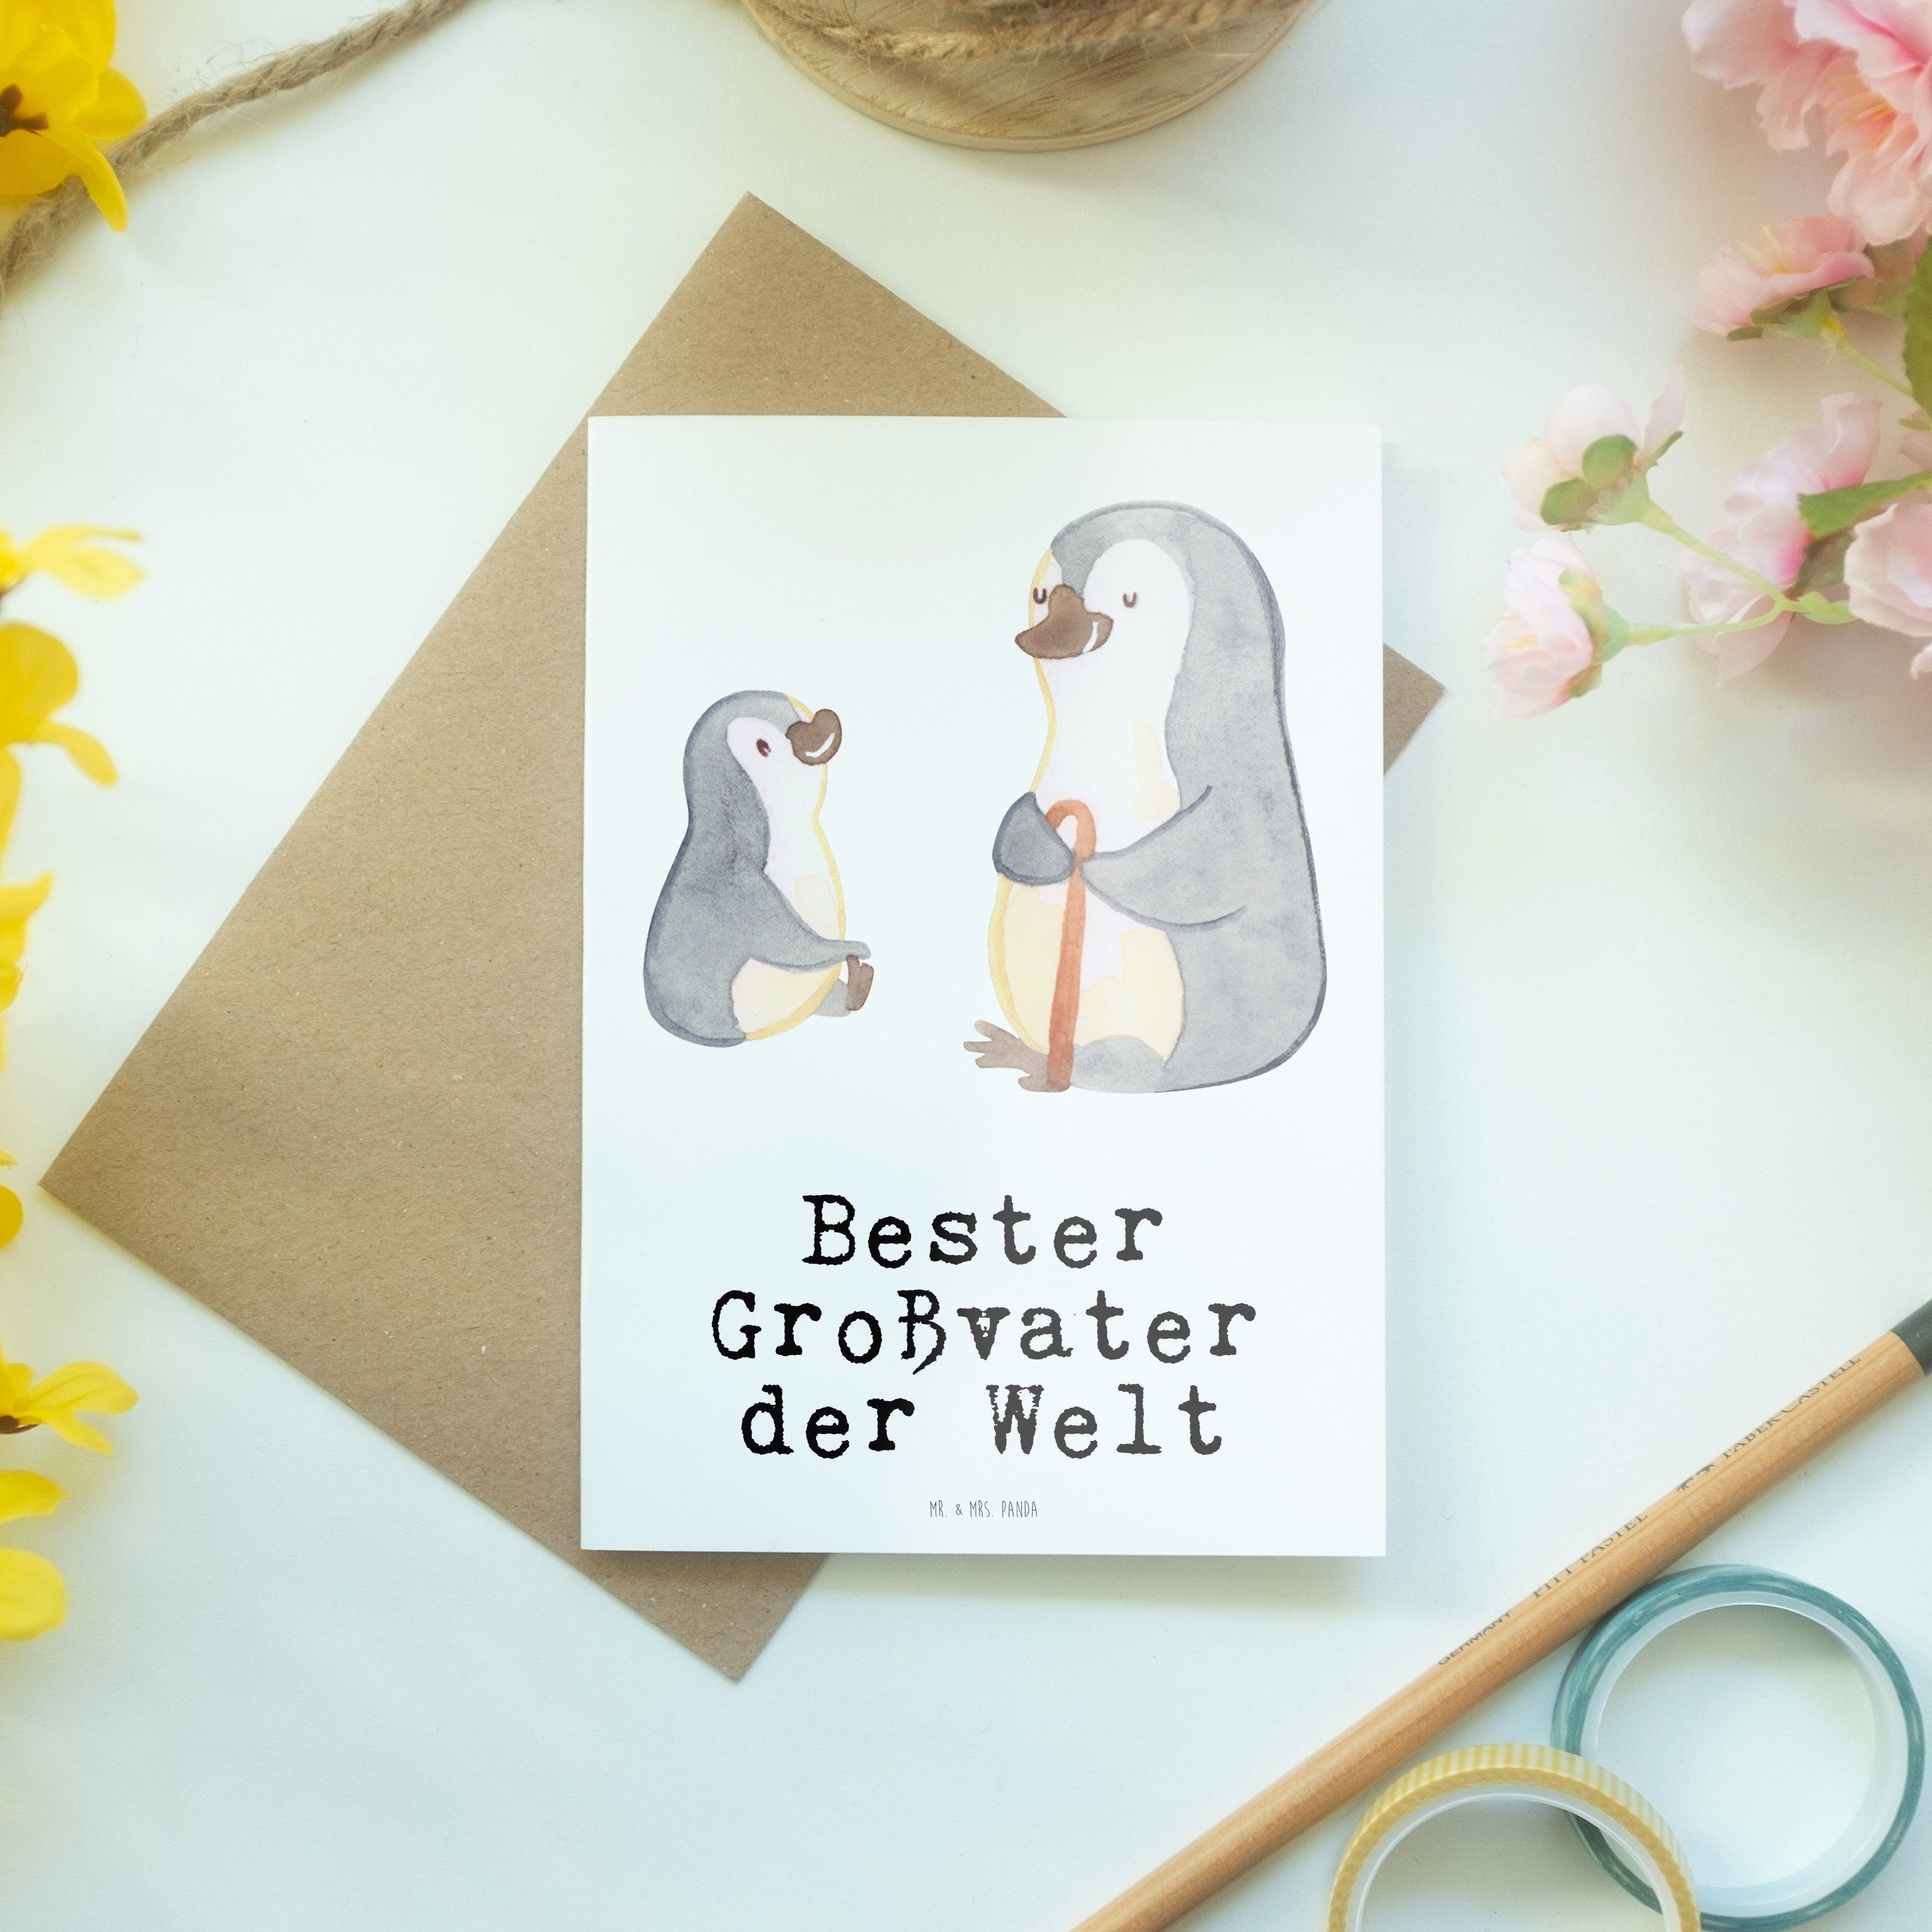 Mr. & Mrs. Panda Grußkarte der Großvater Pinguin Welt Weiß - - Geschenk, Geburt Bester Bedanken